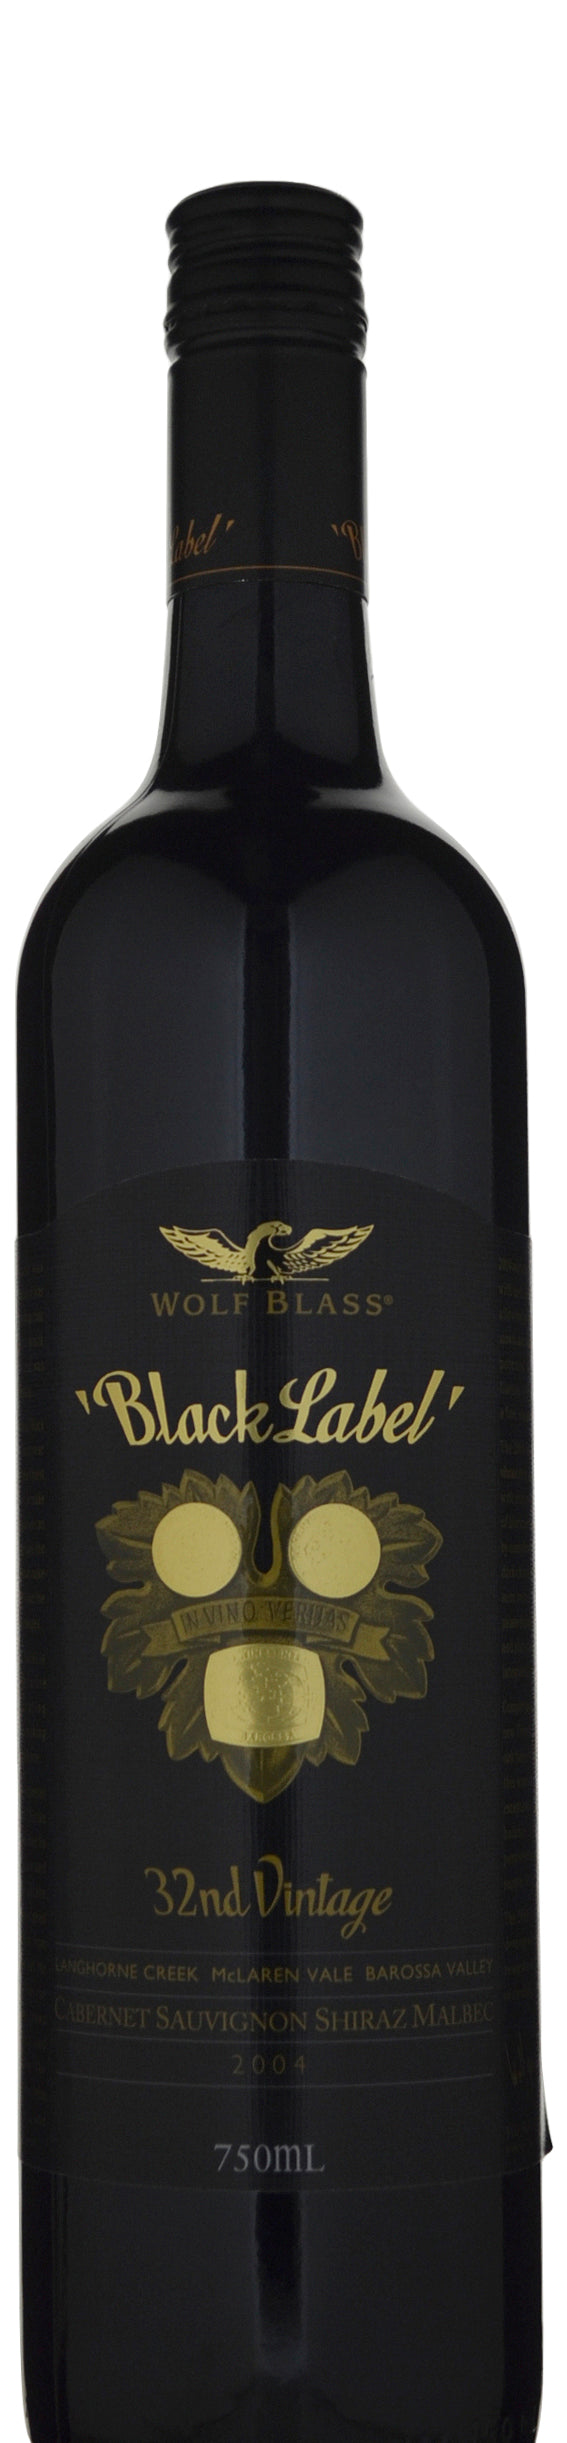 Wolf Blass Black Label Cabernet Shiraz Malbec 2004